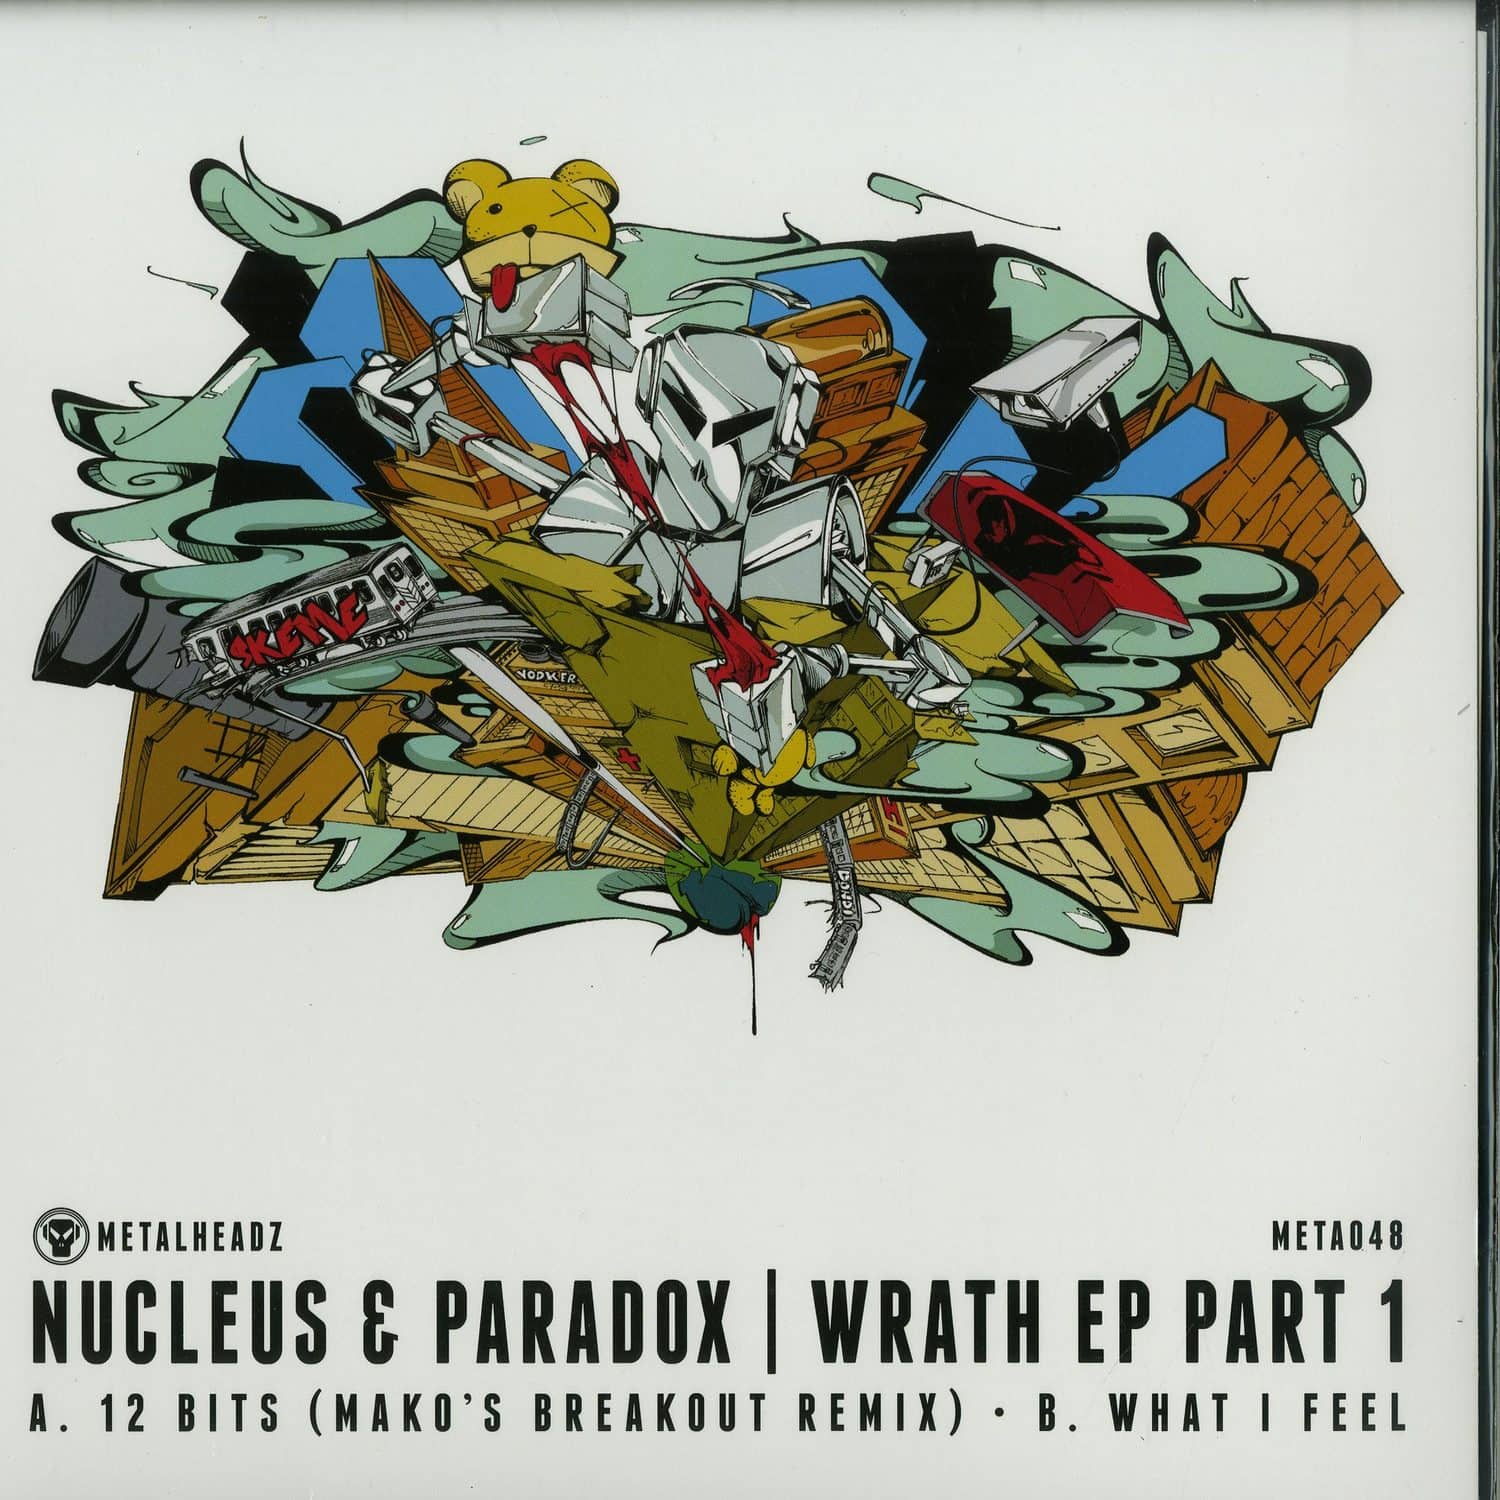 Nucleus & Paradox - WRATH EP PART 1